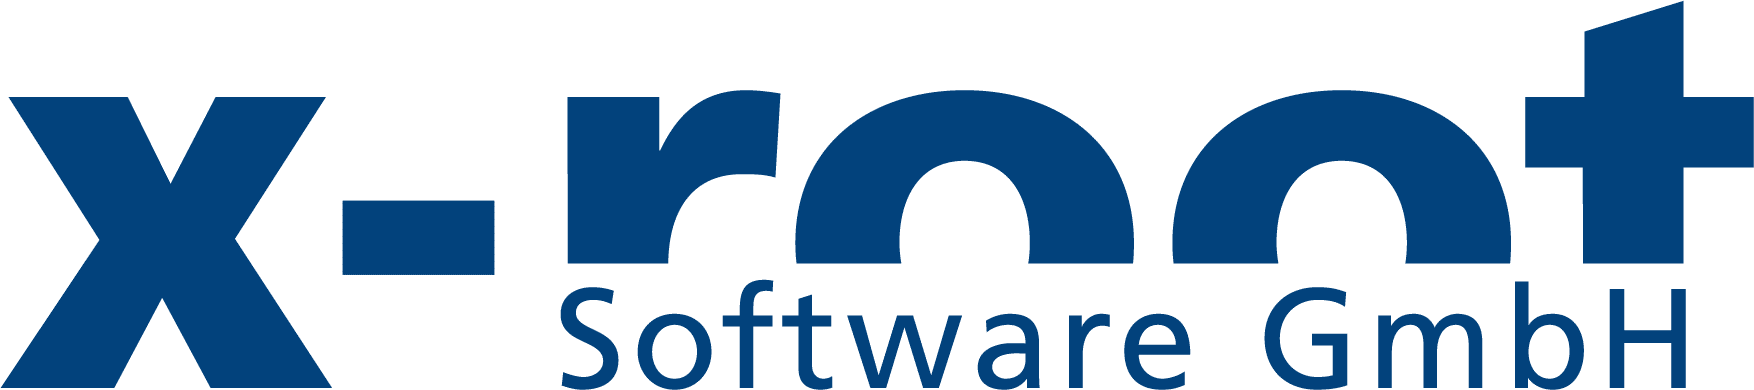 x root Software GmbH Logo 300ppi - Alle Mitglieder